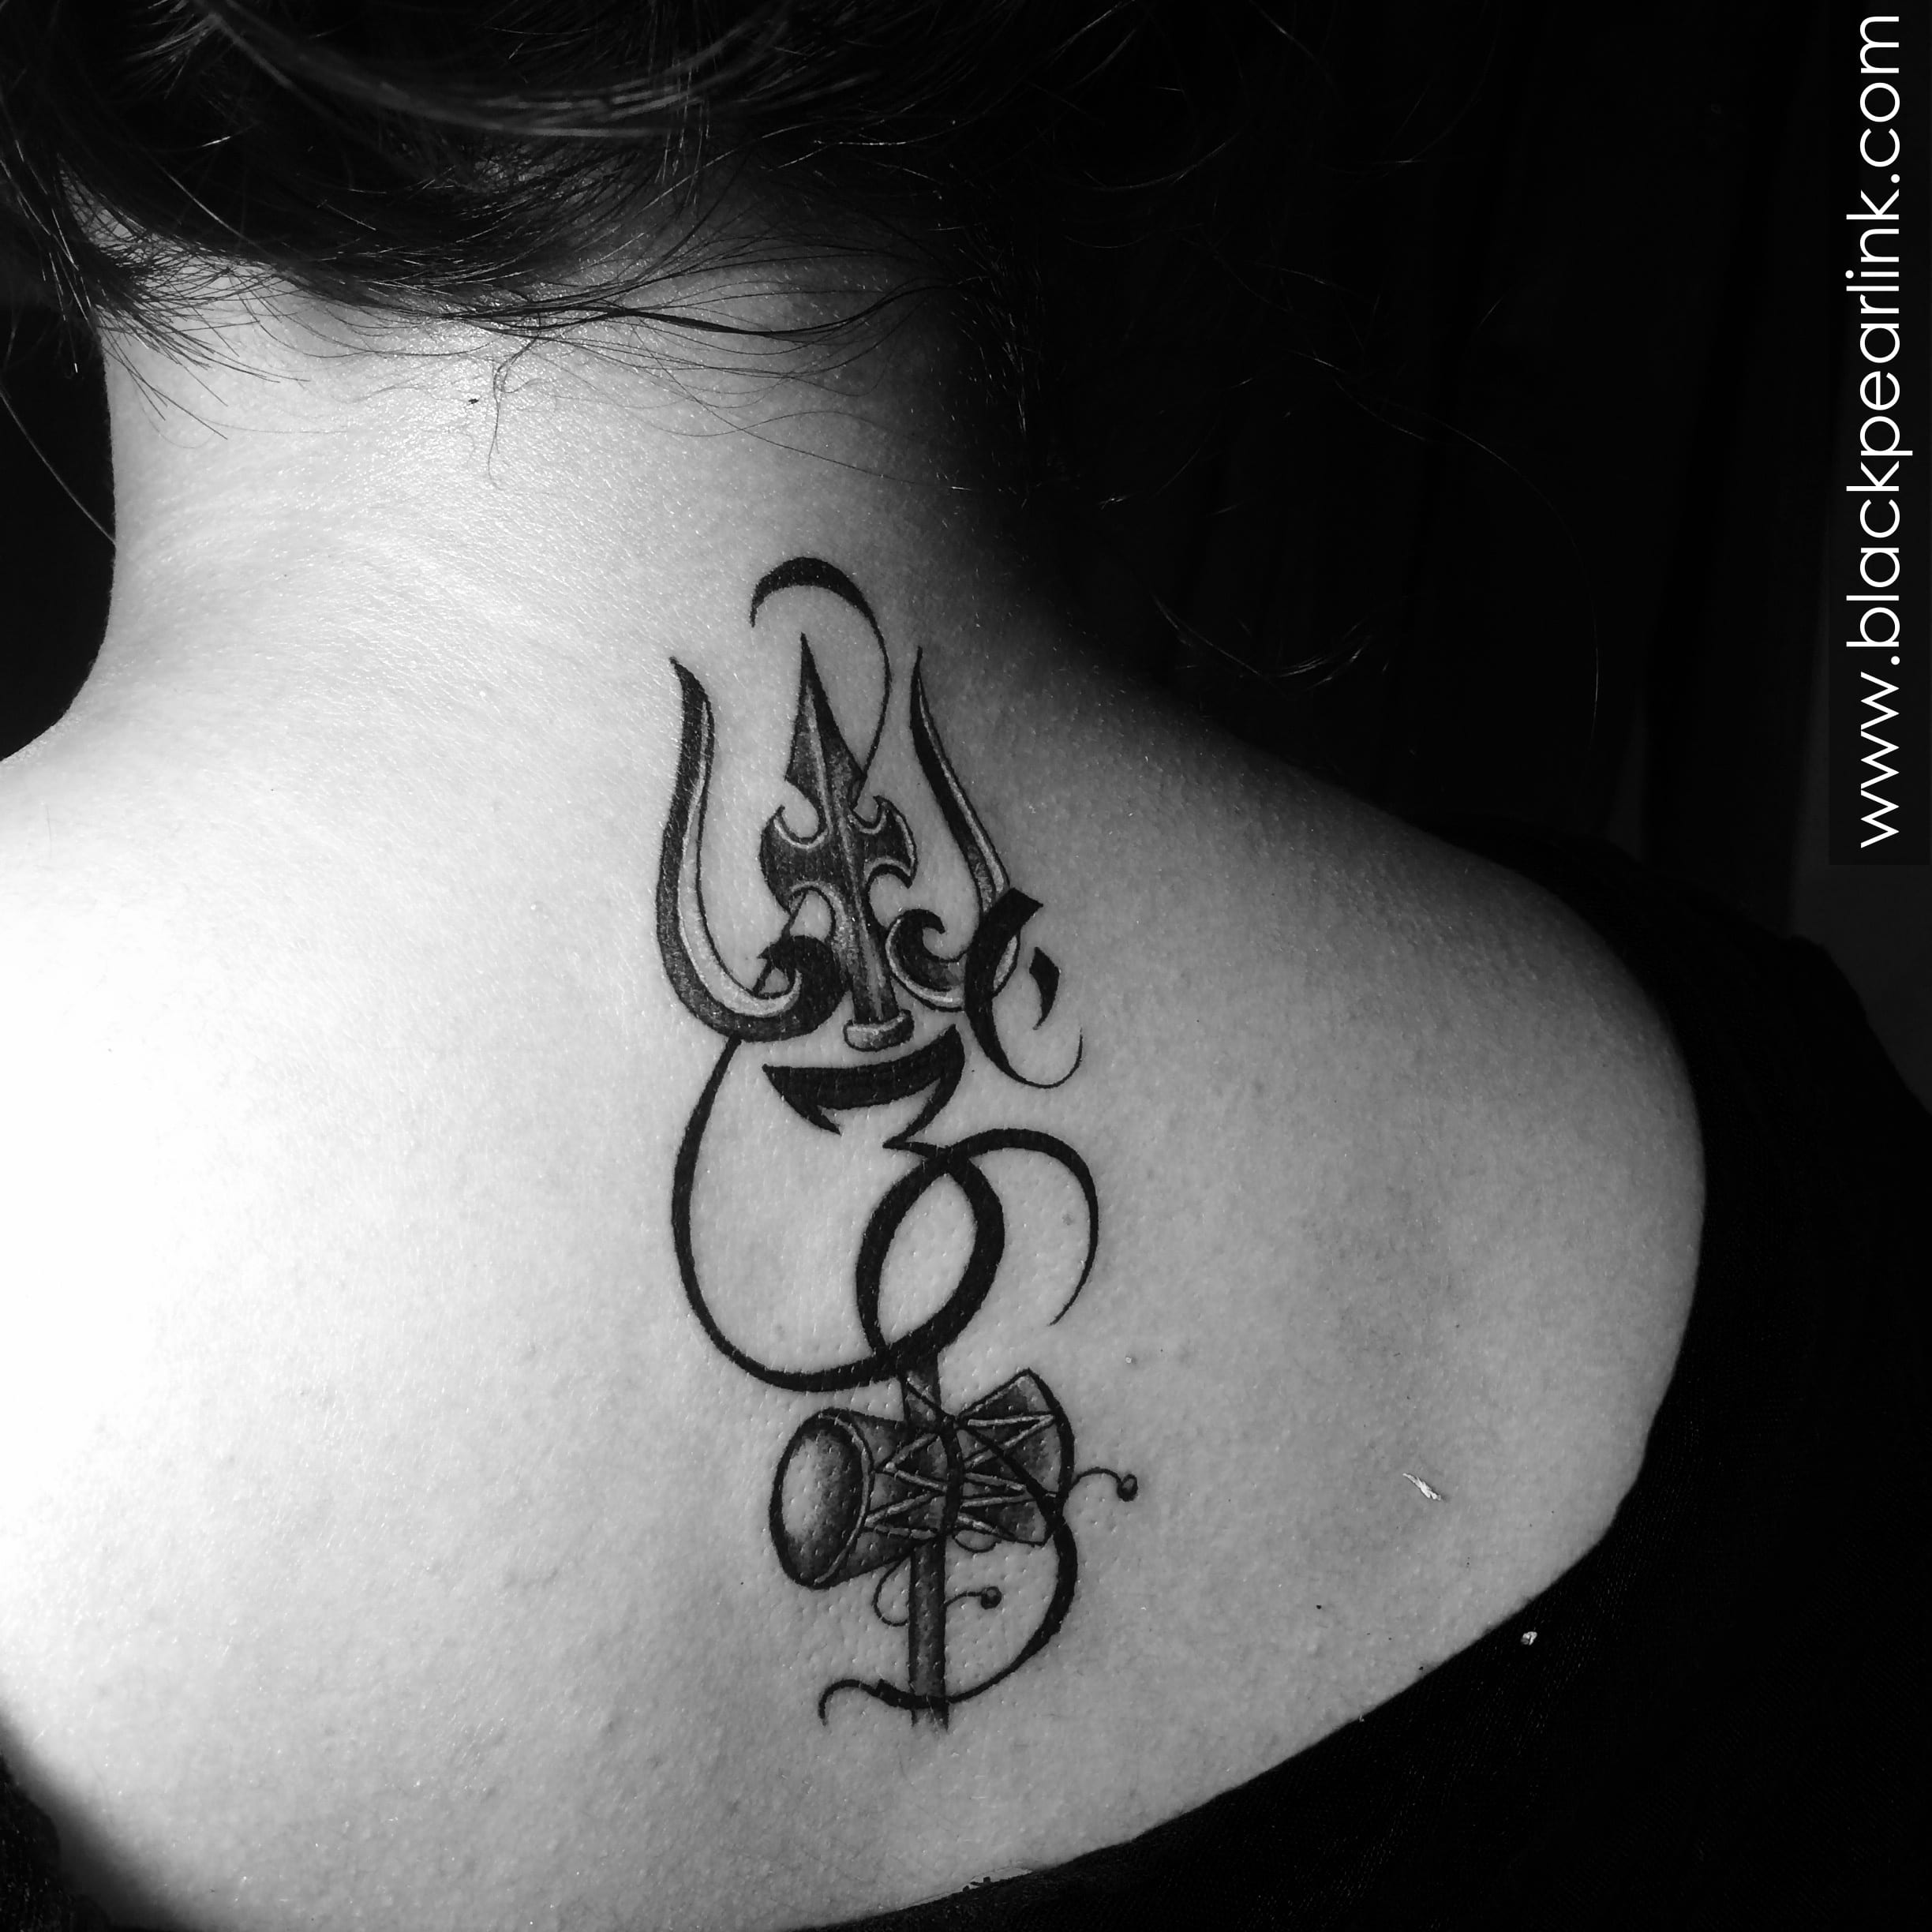 Tattoo uploaded by Samurai Tattoo mehsana  Trishul with om tattoo Om Trishul  tattoo om tattoo design  Tattoodo